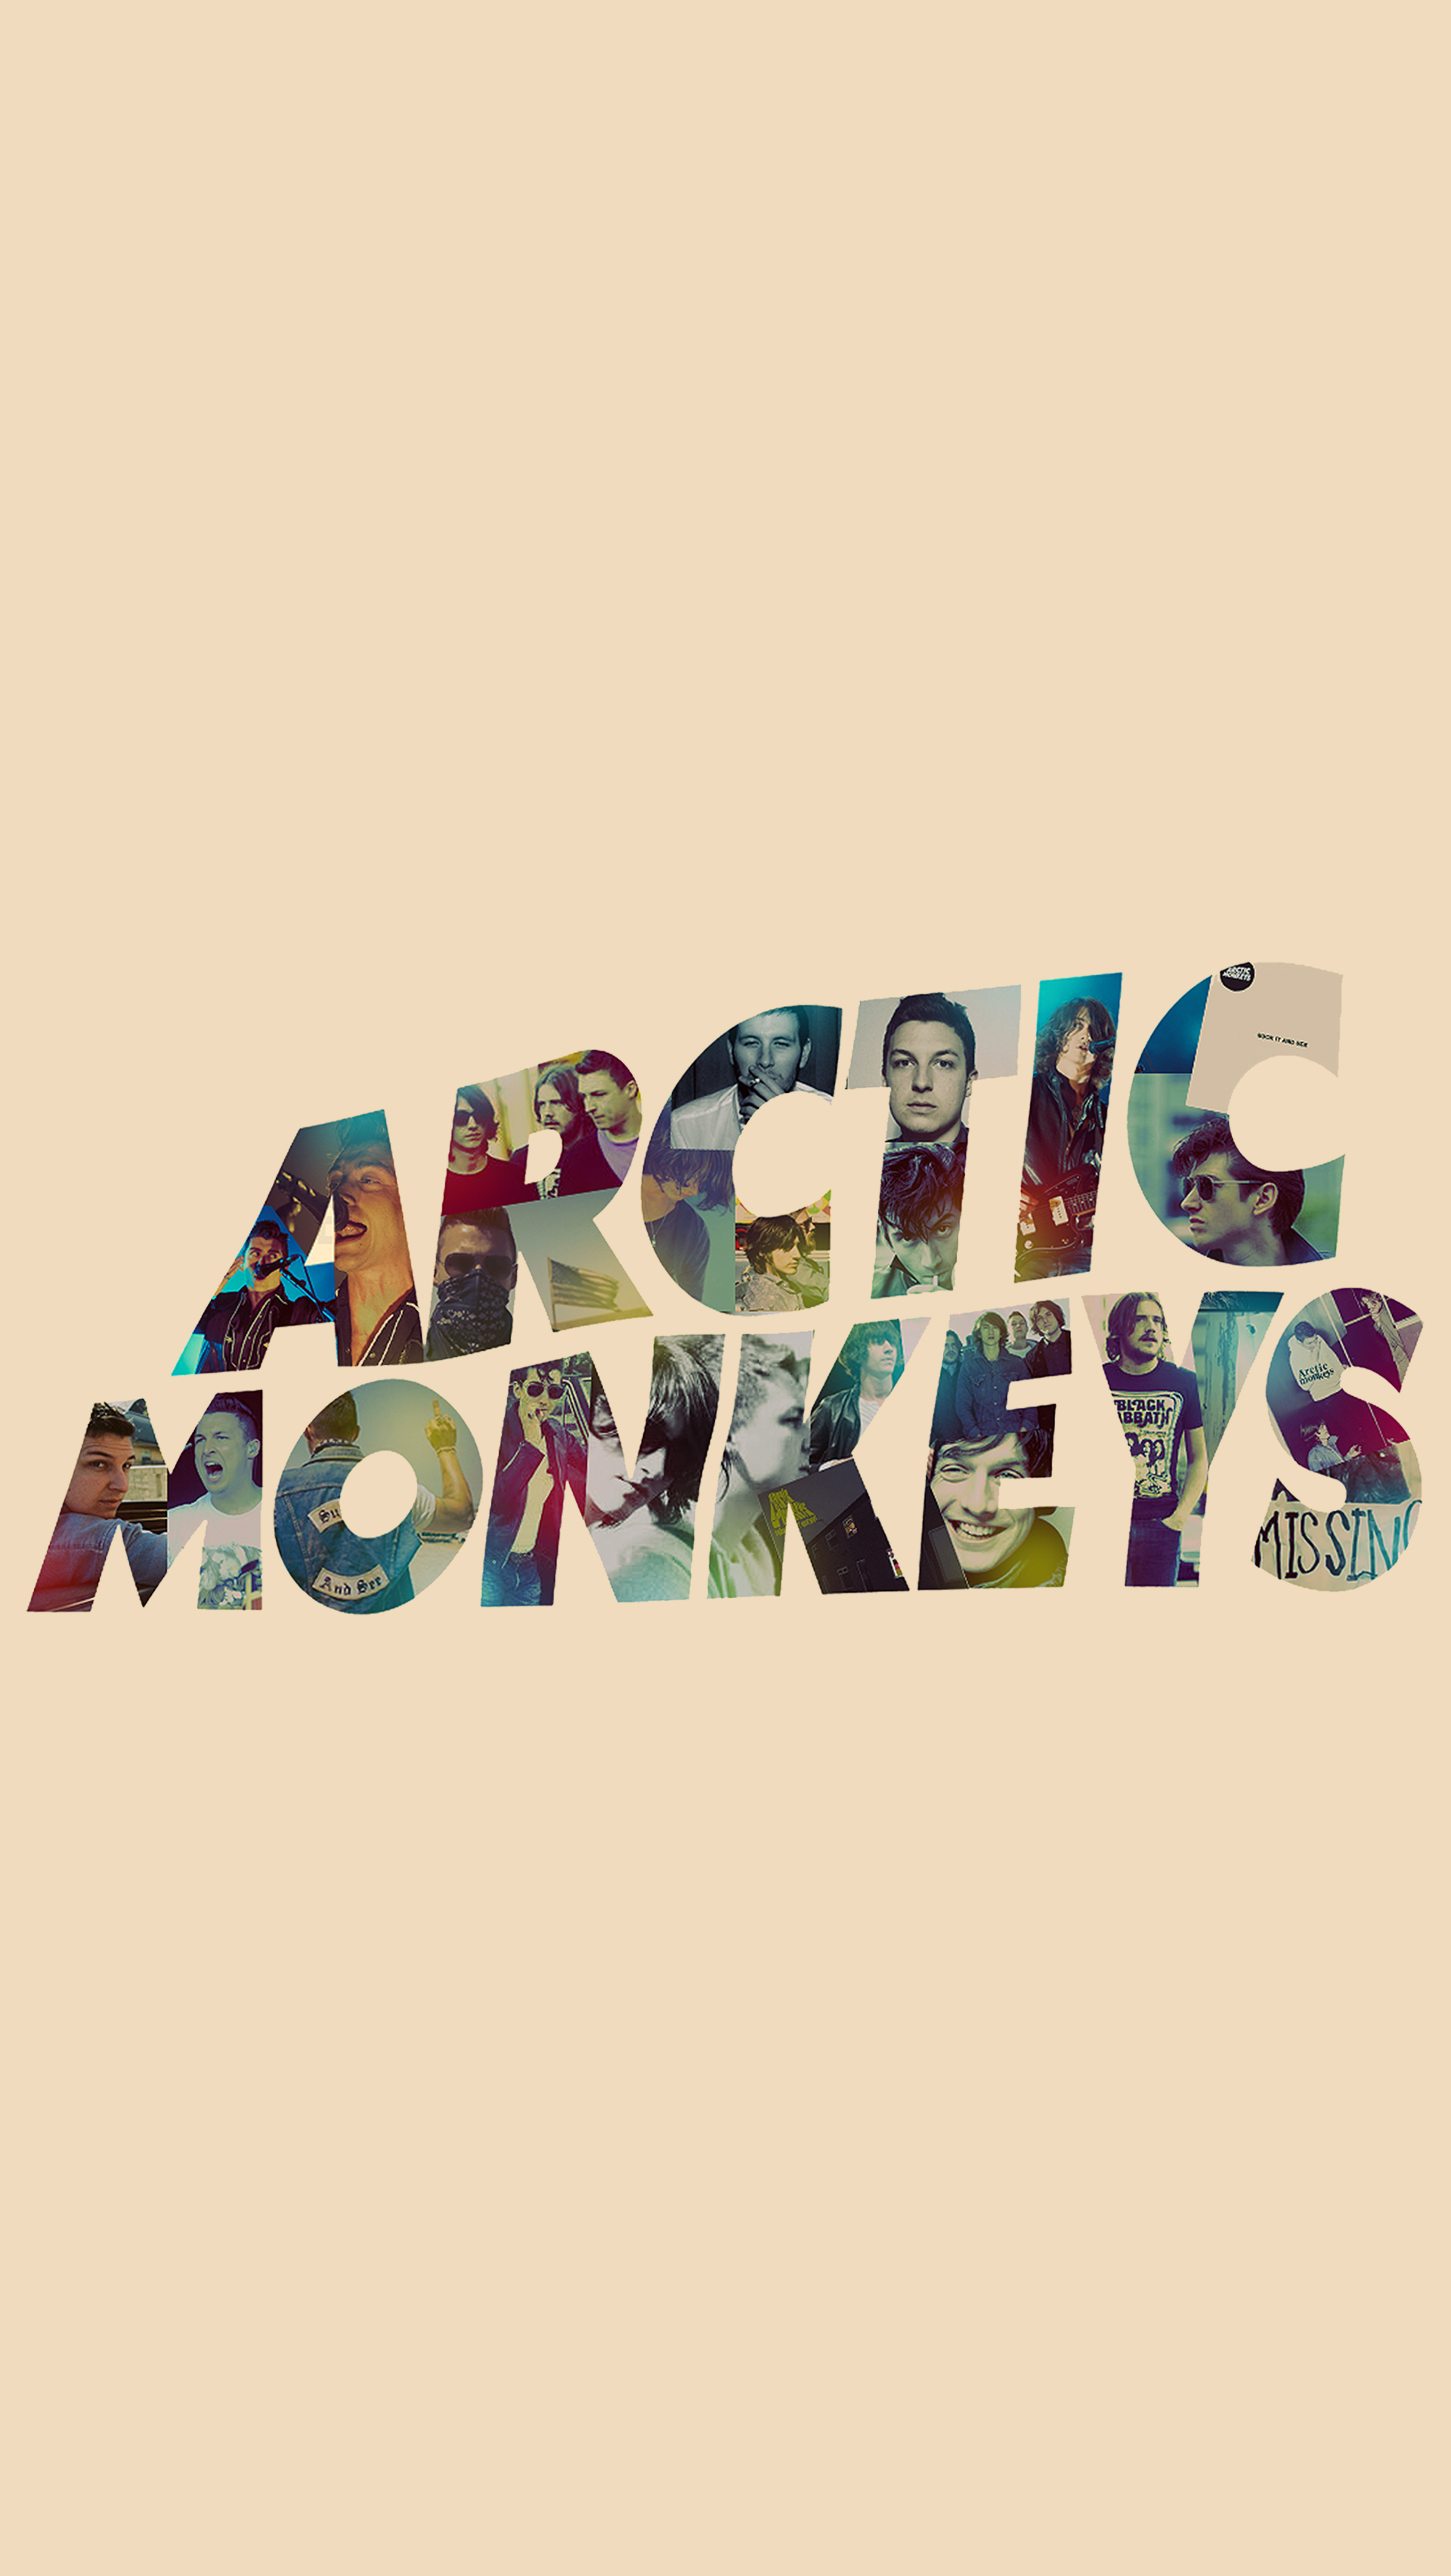 Arcticmonkeys